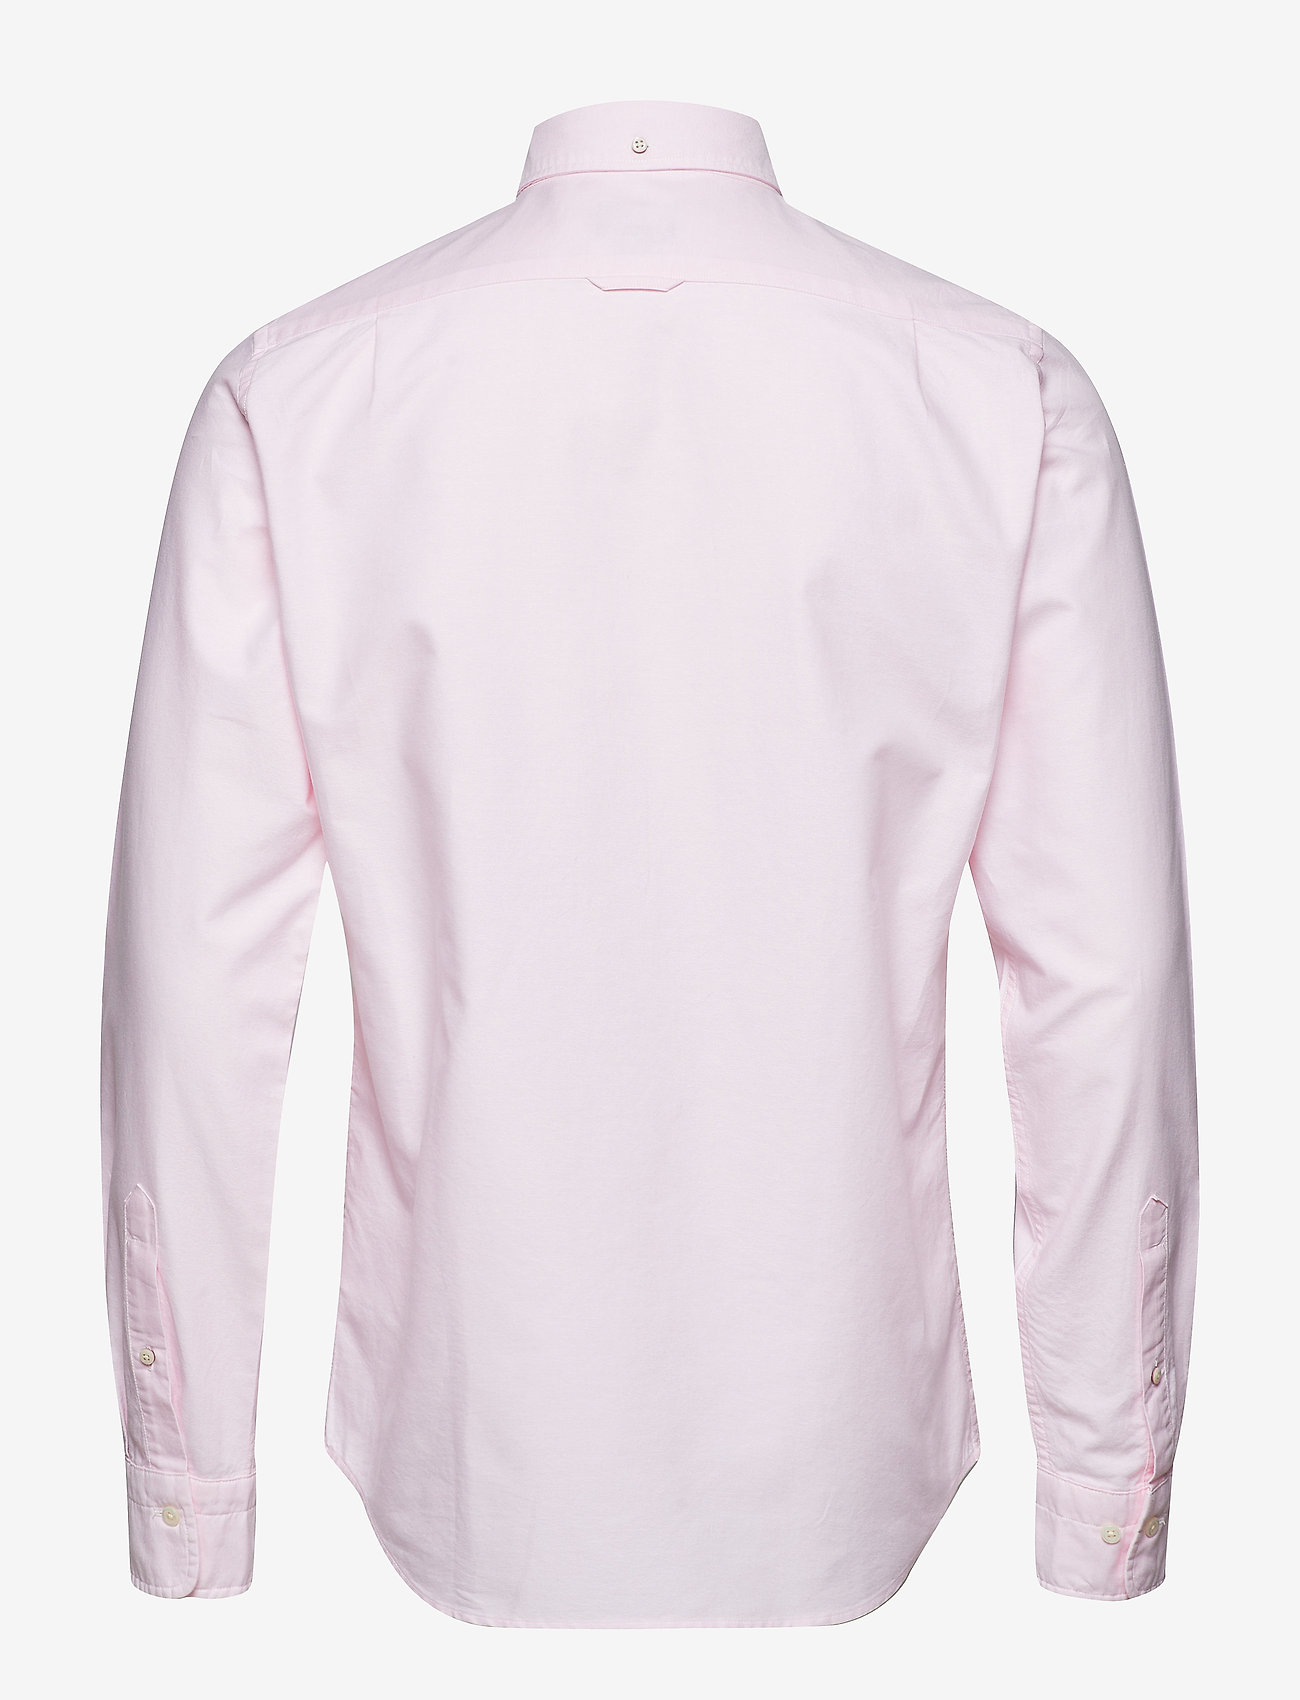 GANT - SLIM OXFORD SHIRT BD - oxford skjorter - light pink - 1